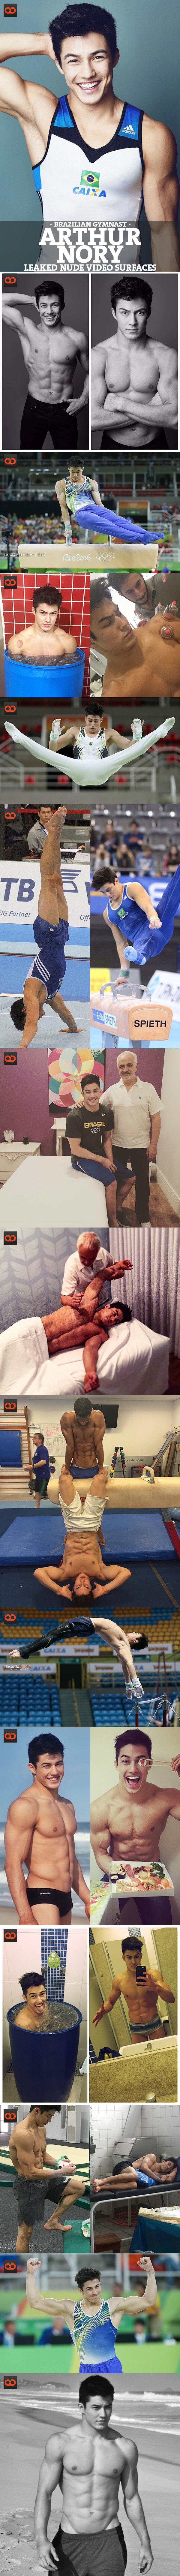 Brazilian Gymnasts Arthur Zanetti And Sergio Sasaki Leaked Nude Video Surfaces - Bonus: Teammate Arthur Nory Also Exposed!